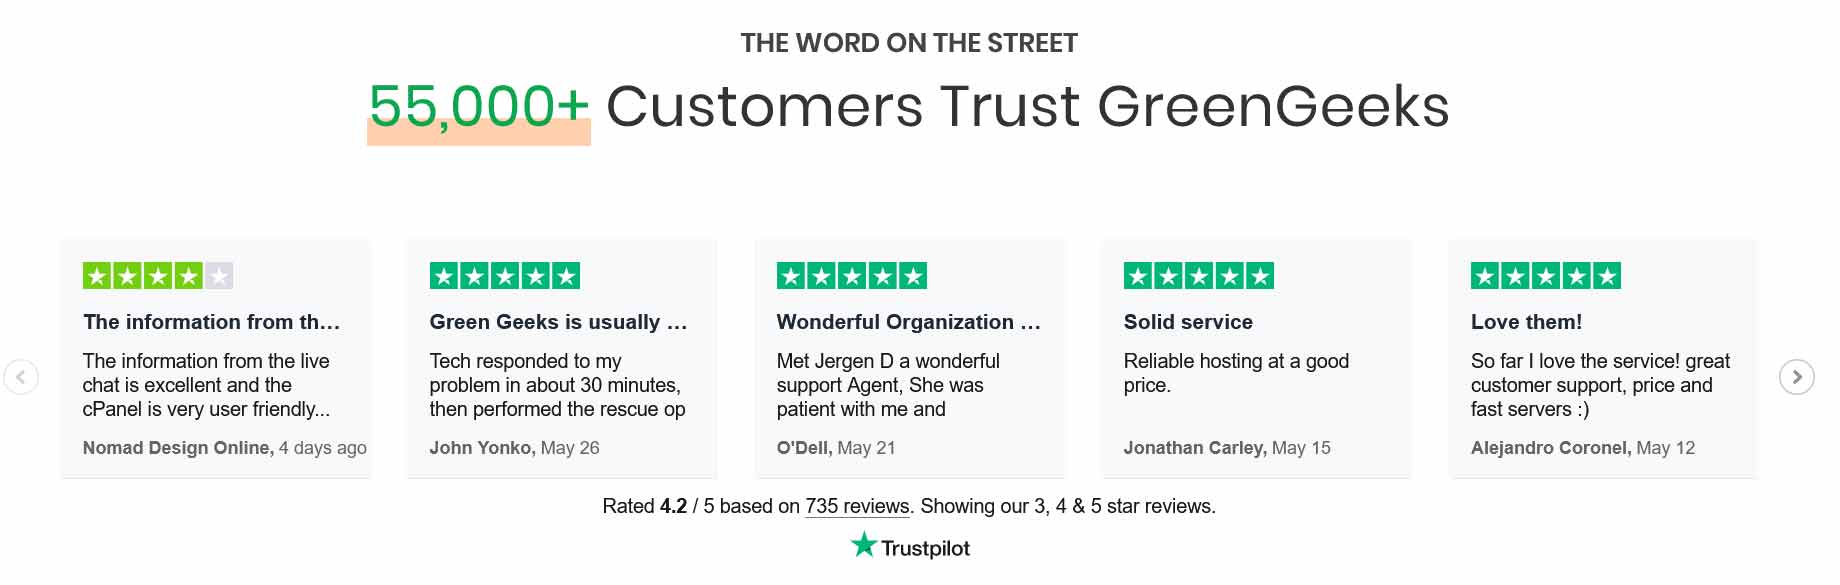 greengeeks-customer-review